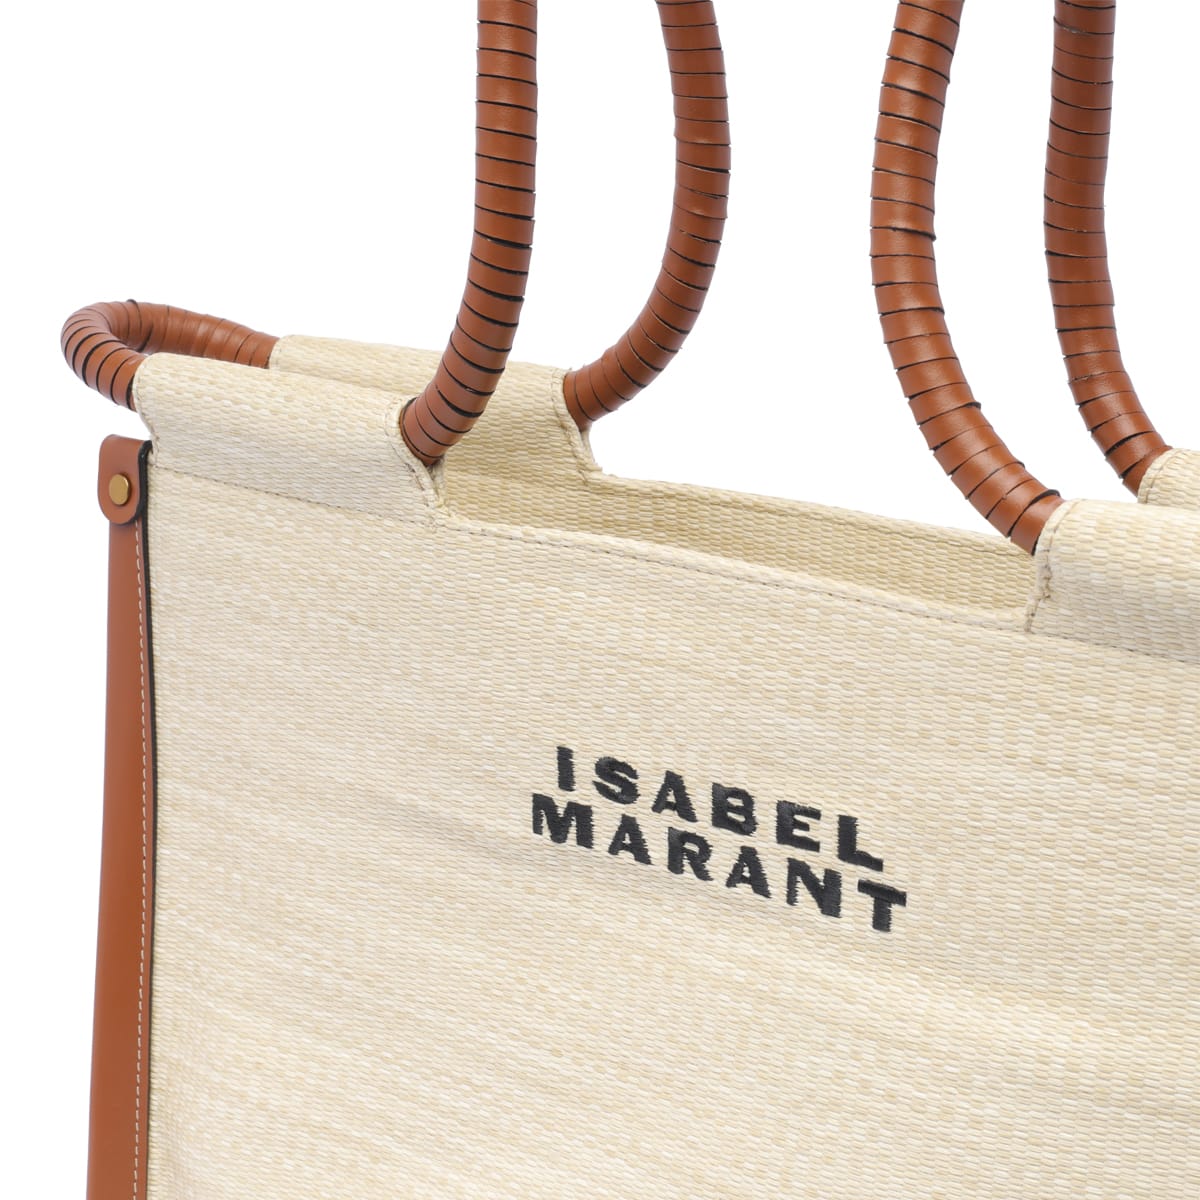 Shop Isabel Marant Toledo Tote Bag In Beige